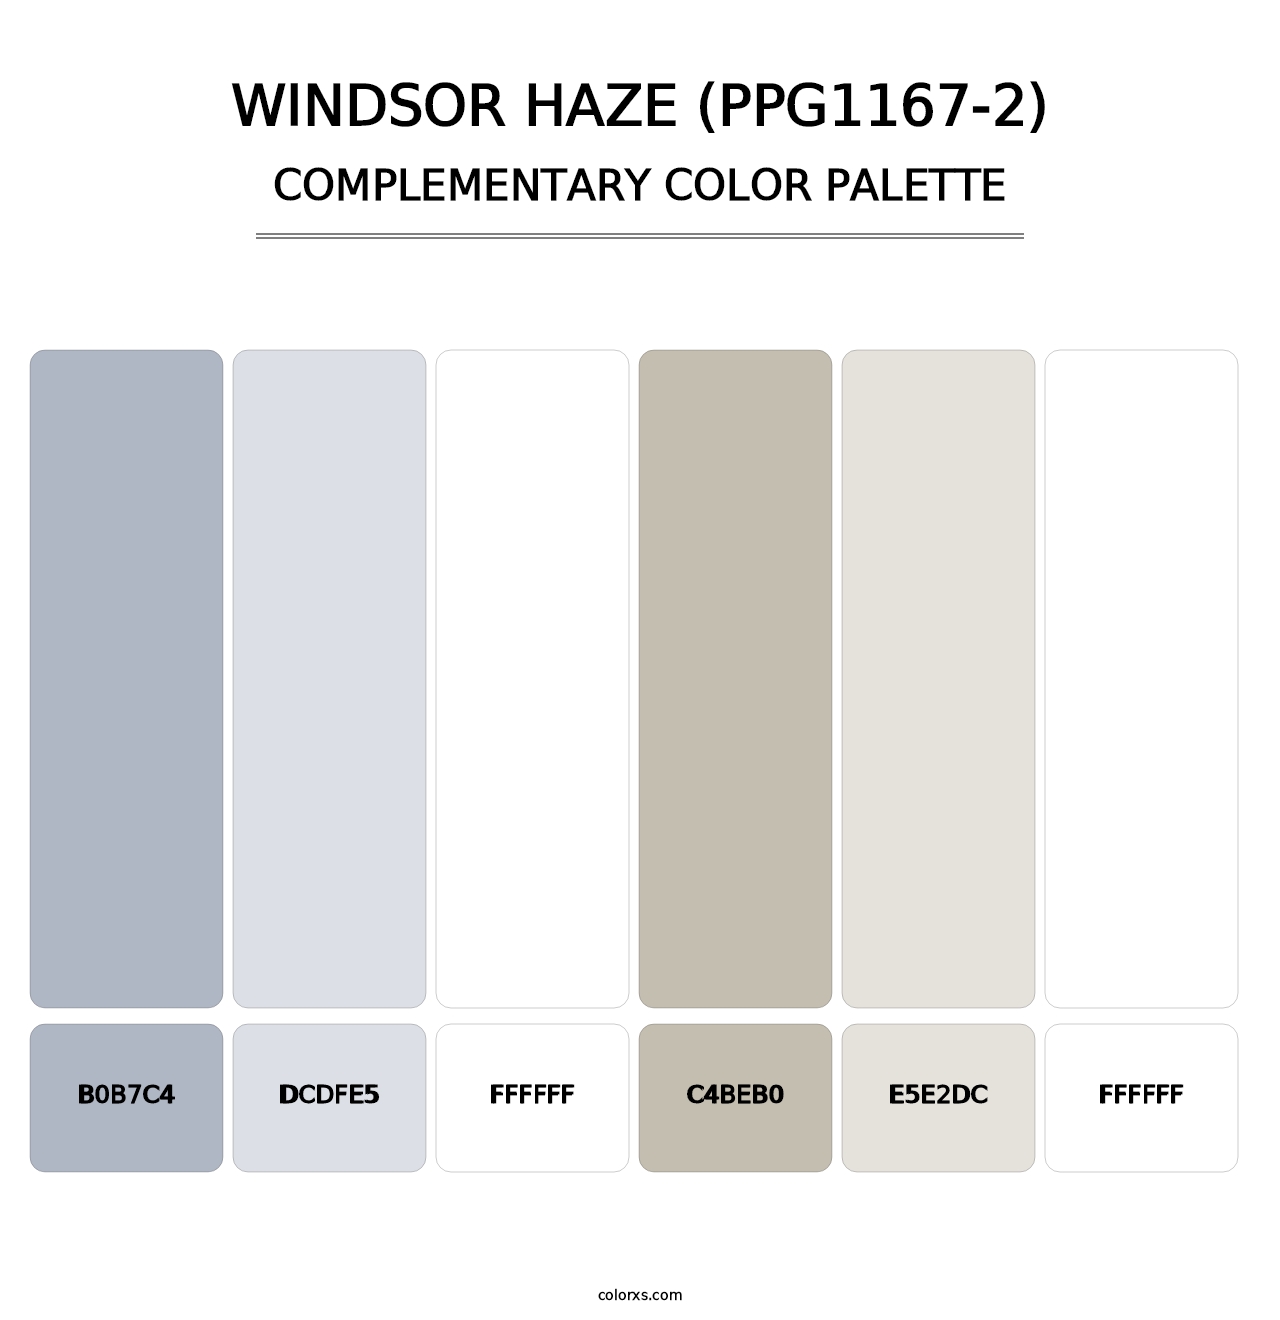 Windsor Haze (PPG1167-2) - Complementary Color Palette